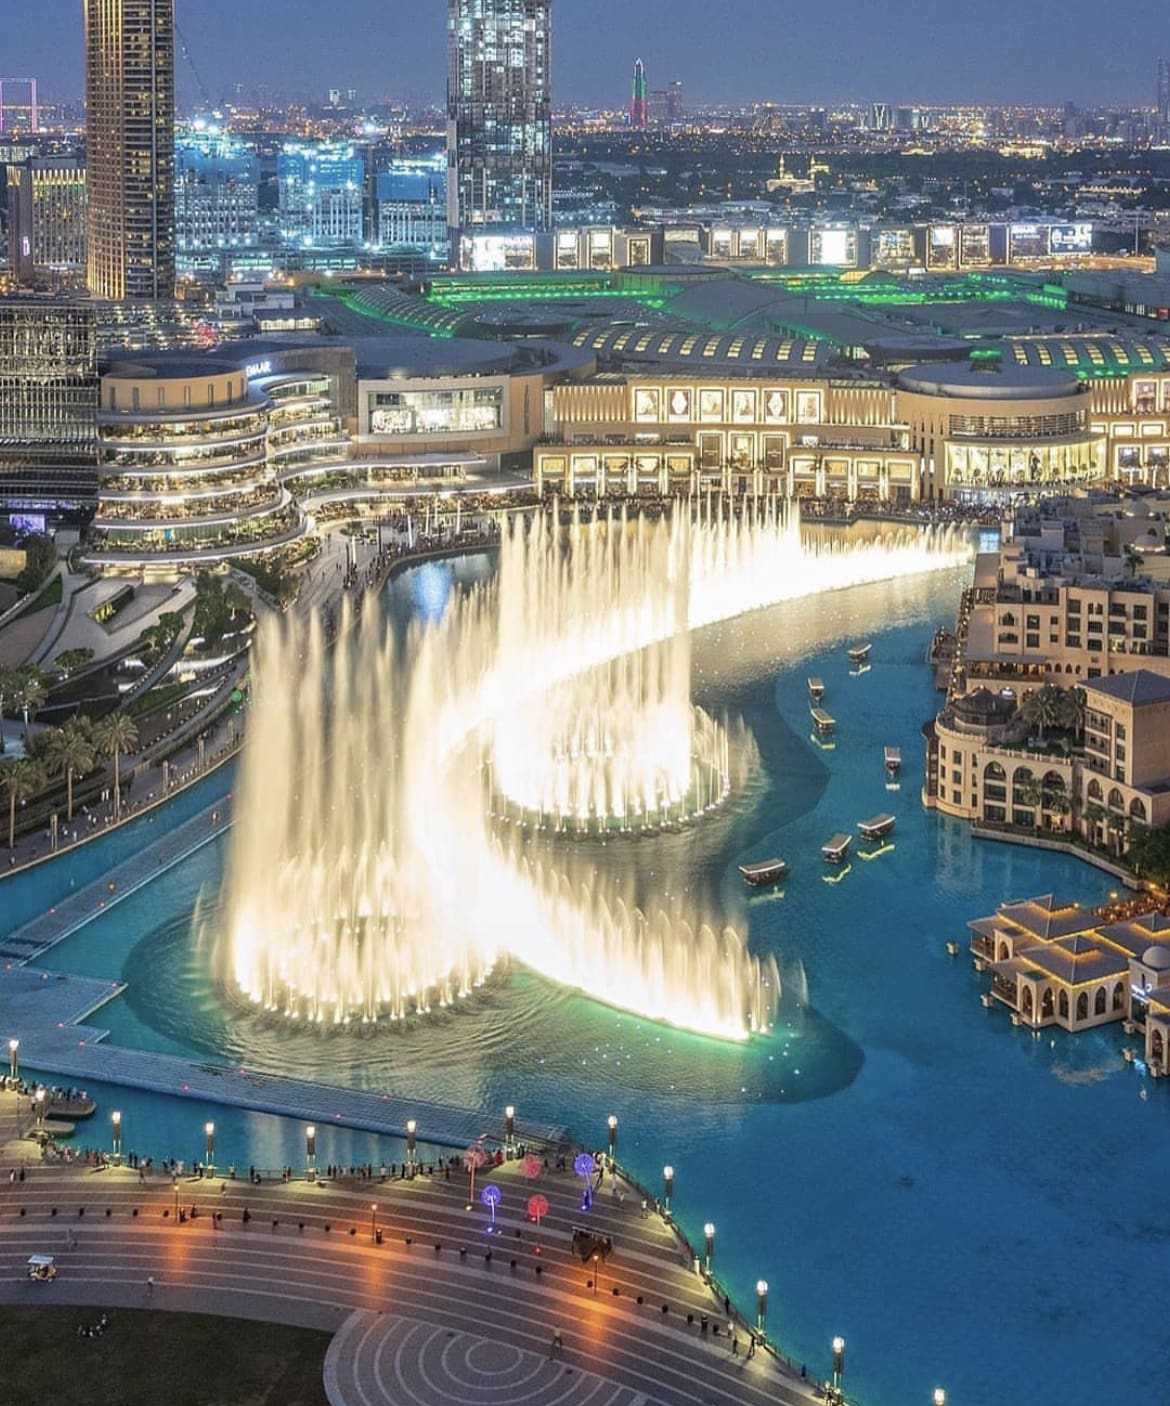 Dubai Fountain Show - 20 Awesome Things To Do In Dubai